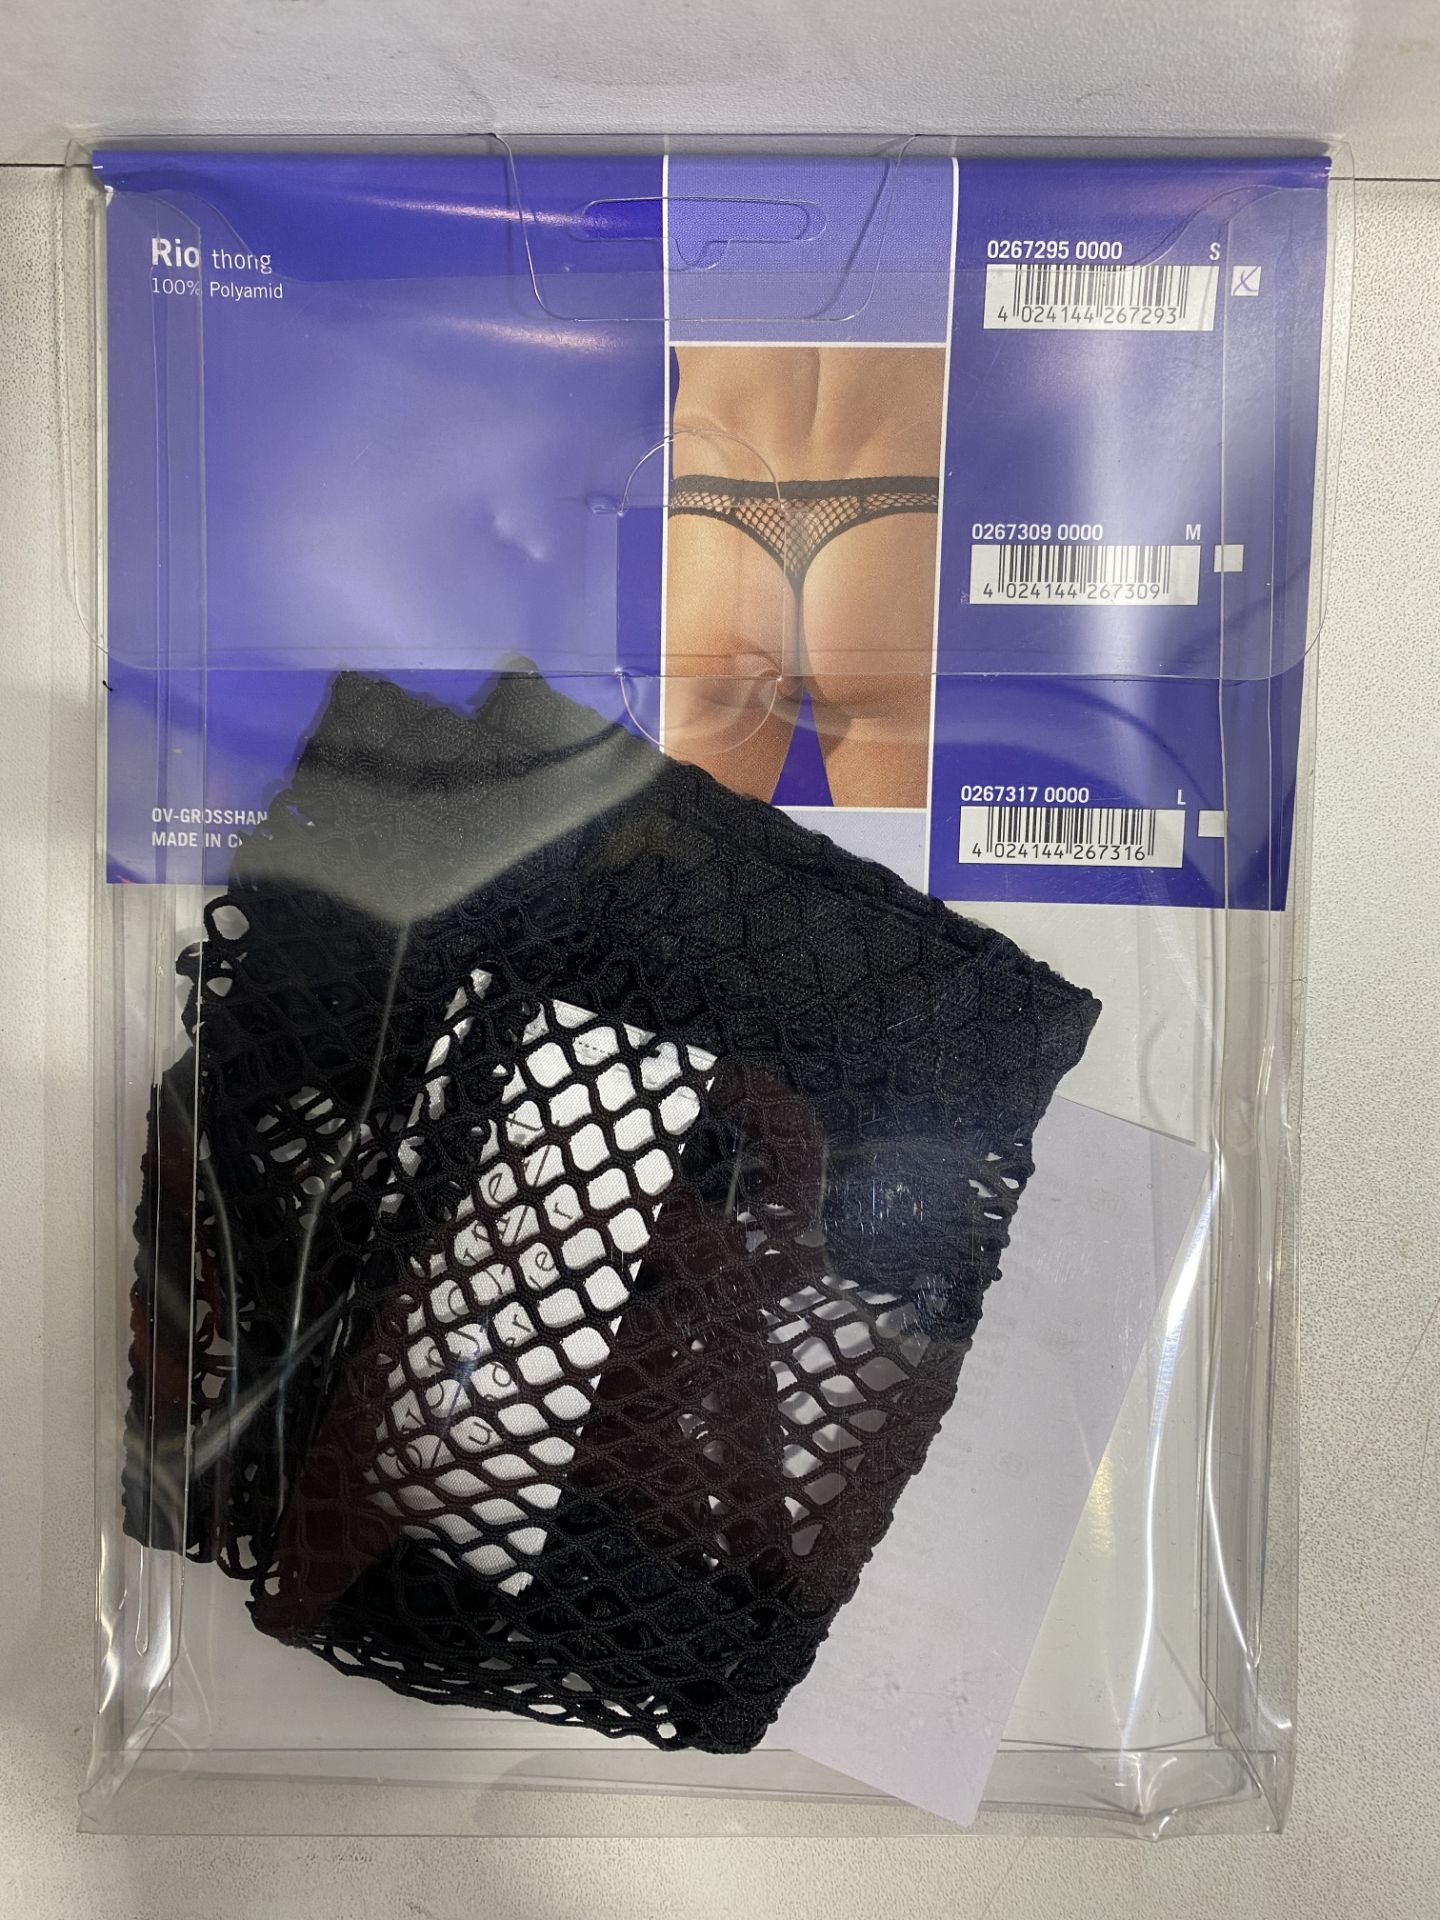 9 x Svenjoyment Underwear Net 'Rio' Thong, Small - Image 2 of 2